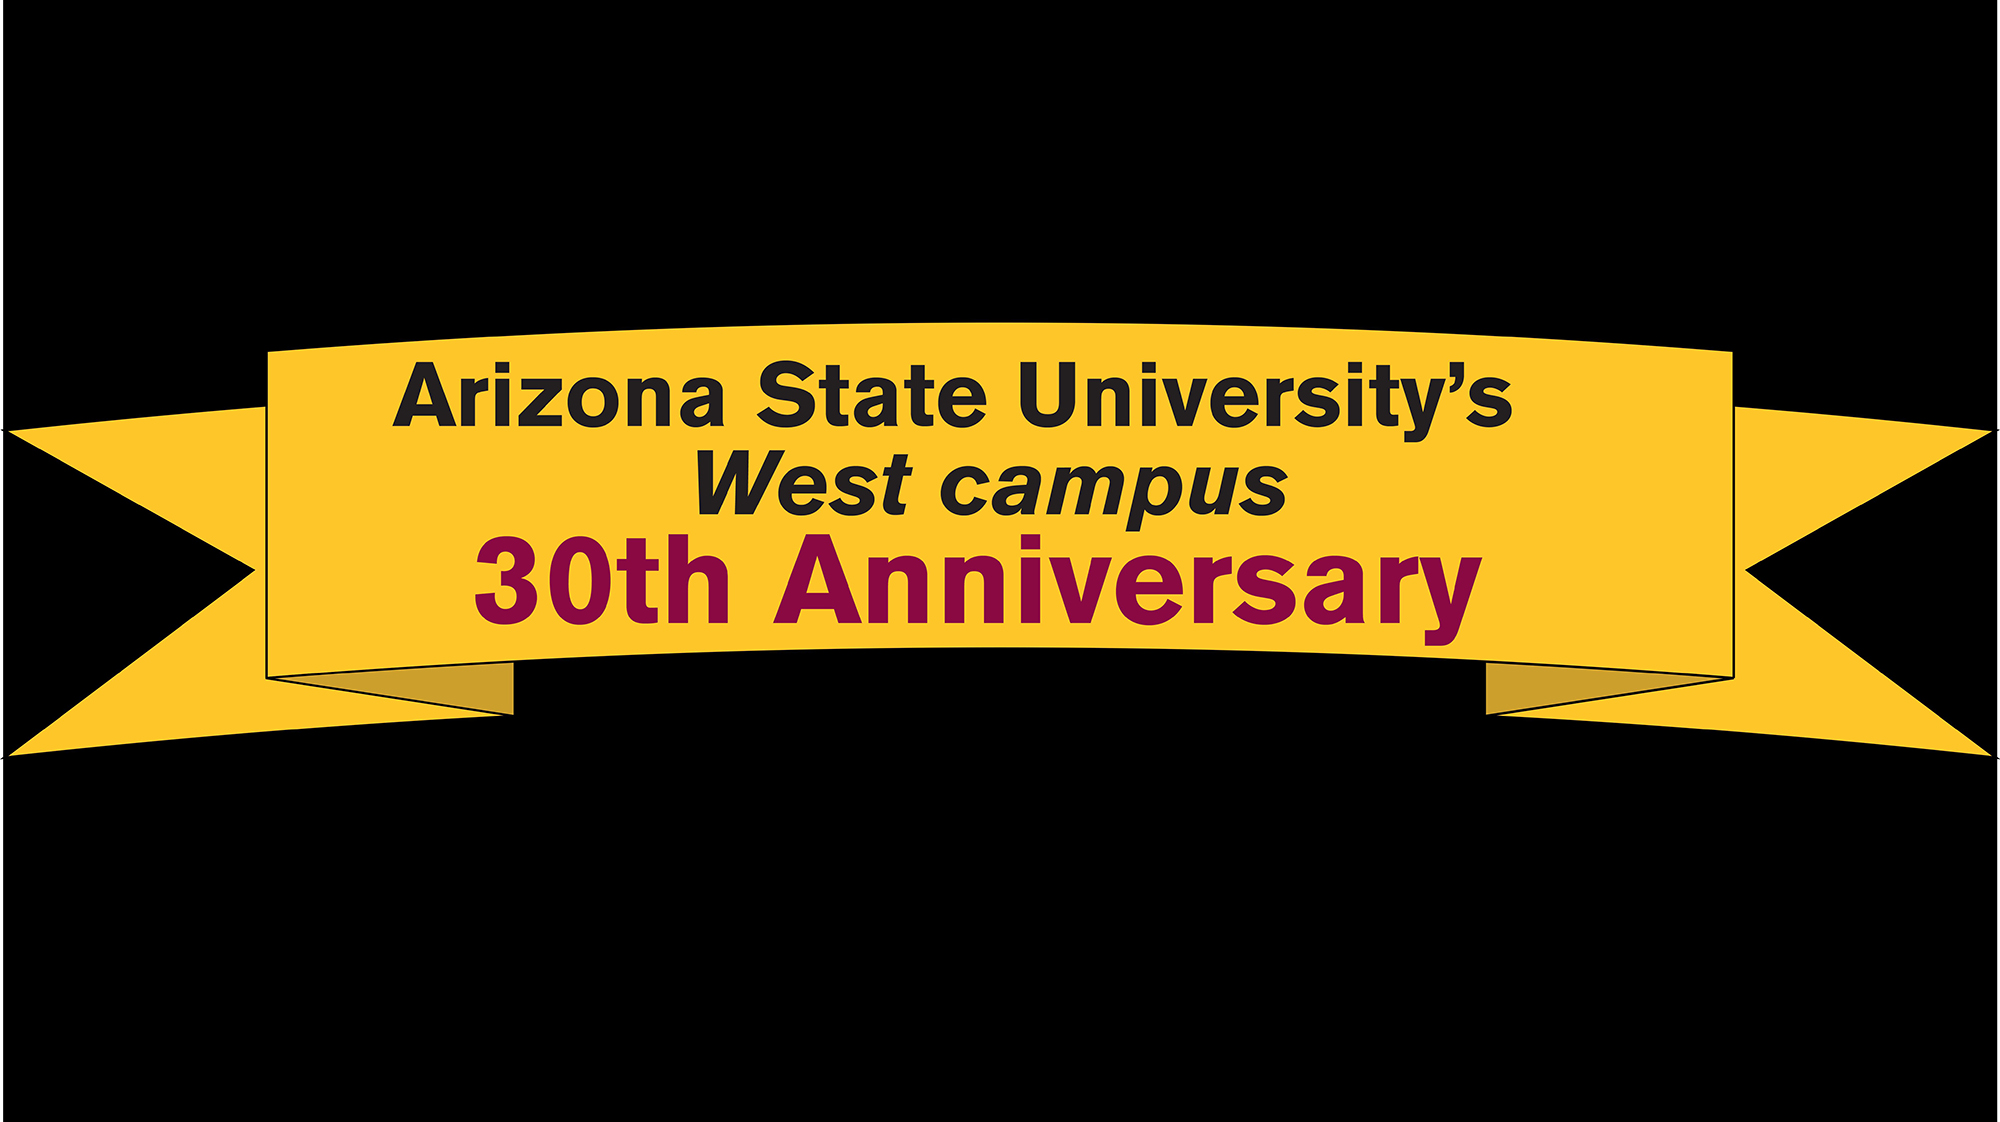 West campus 30th anniversary logo